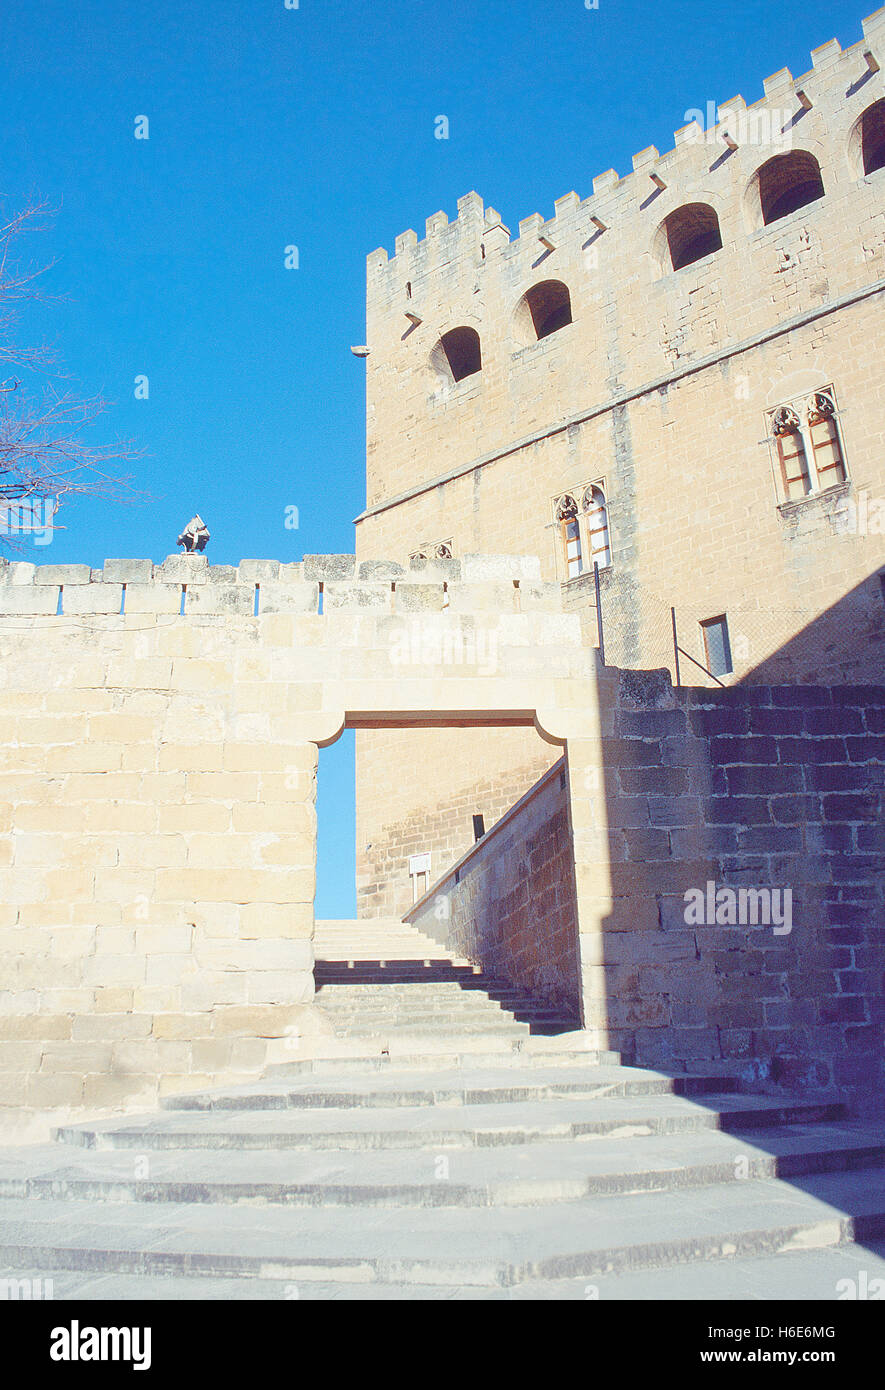 Entrance to the castle. Valderrobres, Teruel province, Aragon, Spain. Stock Photo